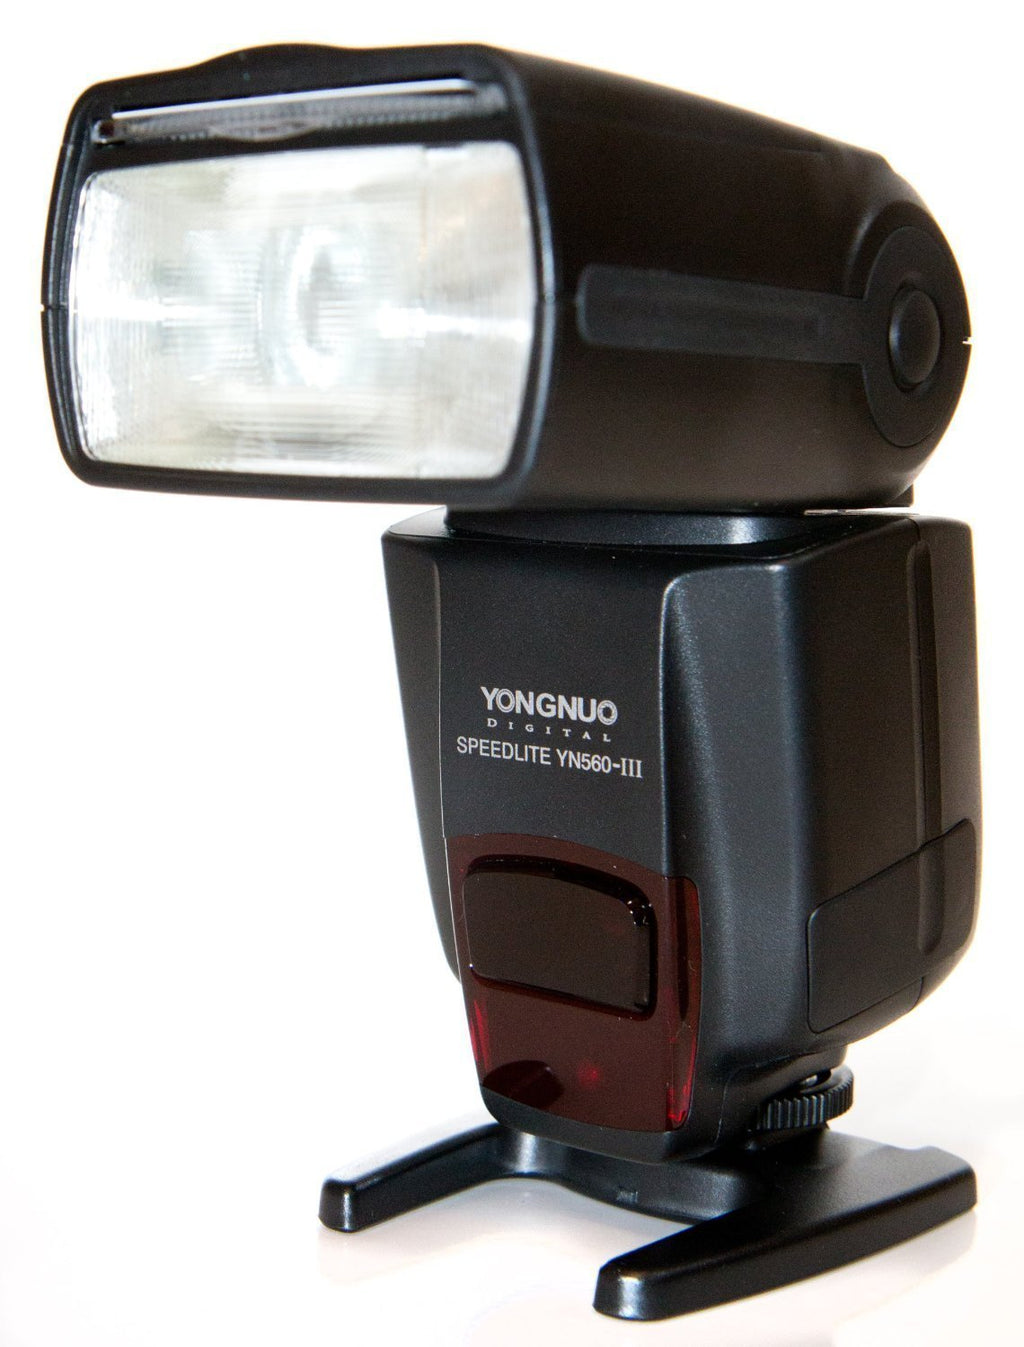 Yongnuo Professional Wireless Flash Speedlight Flashlight Yongnuo YN 560 III for Canon Nikon Pentax Olympus Camera